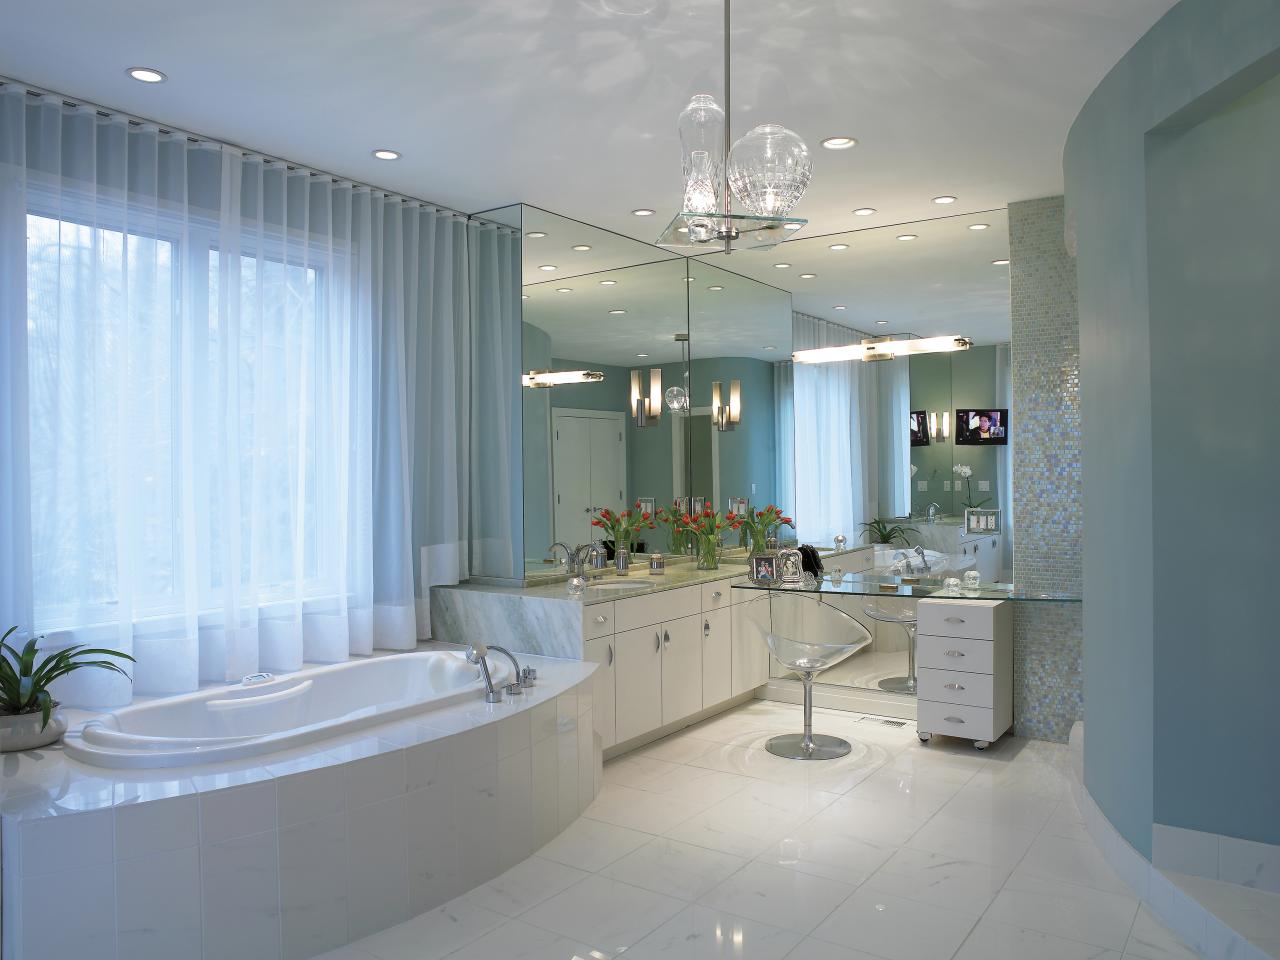 Bathroom Layouts That Work Bathroom Design Choose Floor Plan & Bath Remodeling Materials HGTV